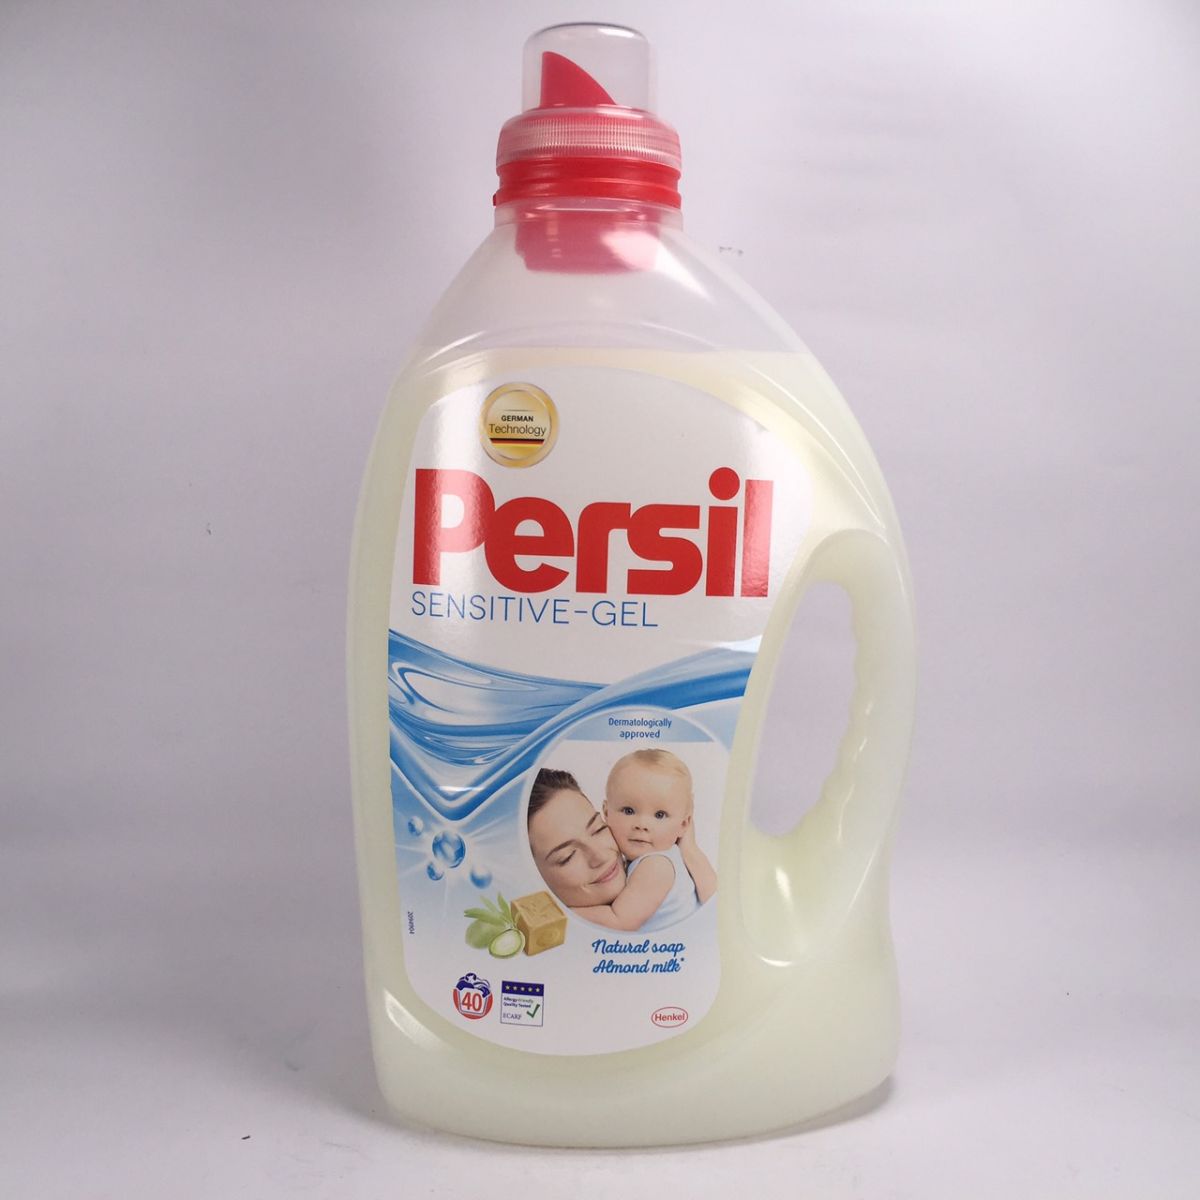 Persil 濃縮高效能洗衣精-敏感膚質適用 [2.92公升 40杯 乳白] 